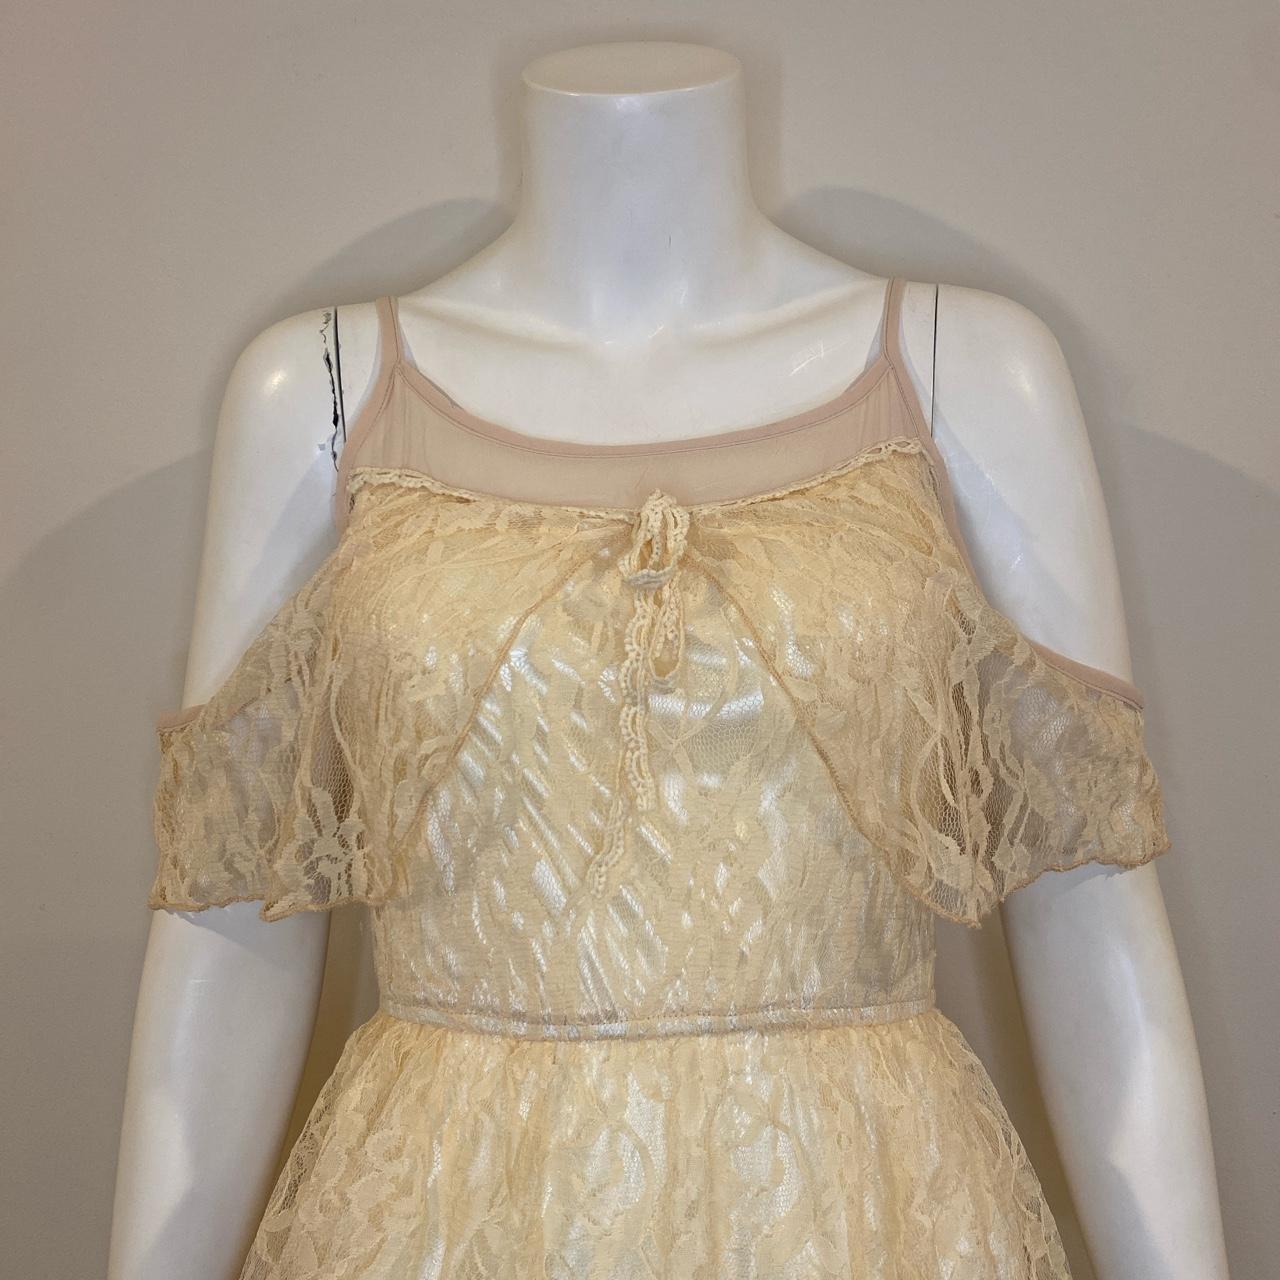 Raga Women's Cream and Tan Dress (4)